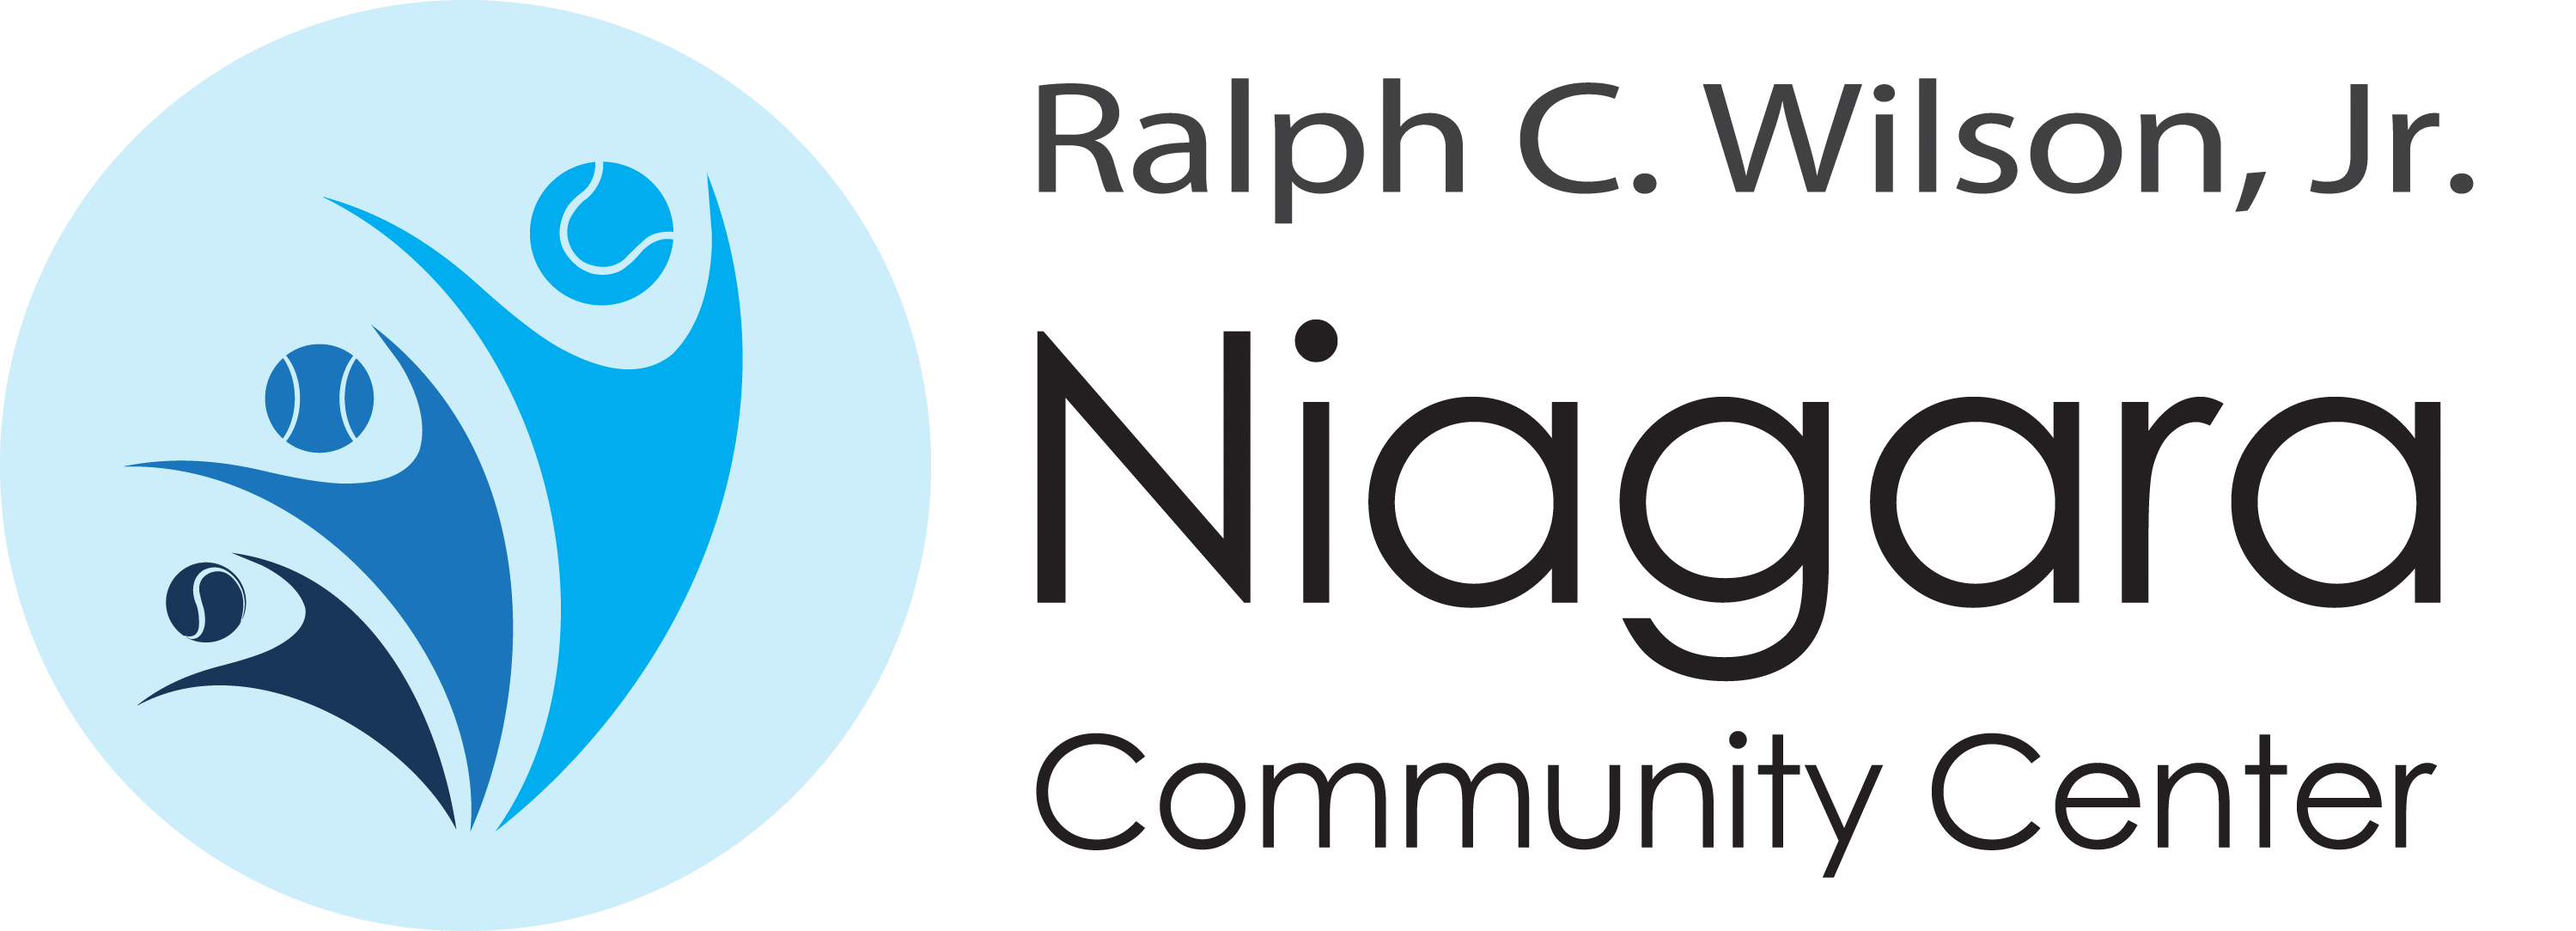 Ralph C. Wilson, Jr. Niagara Community Center